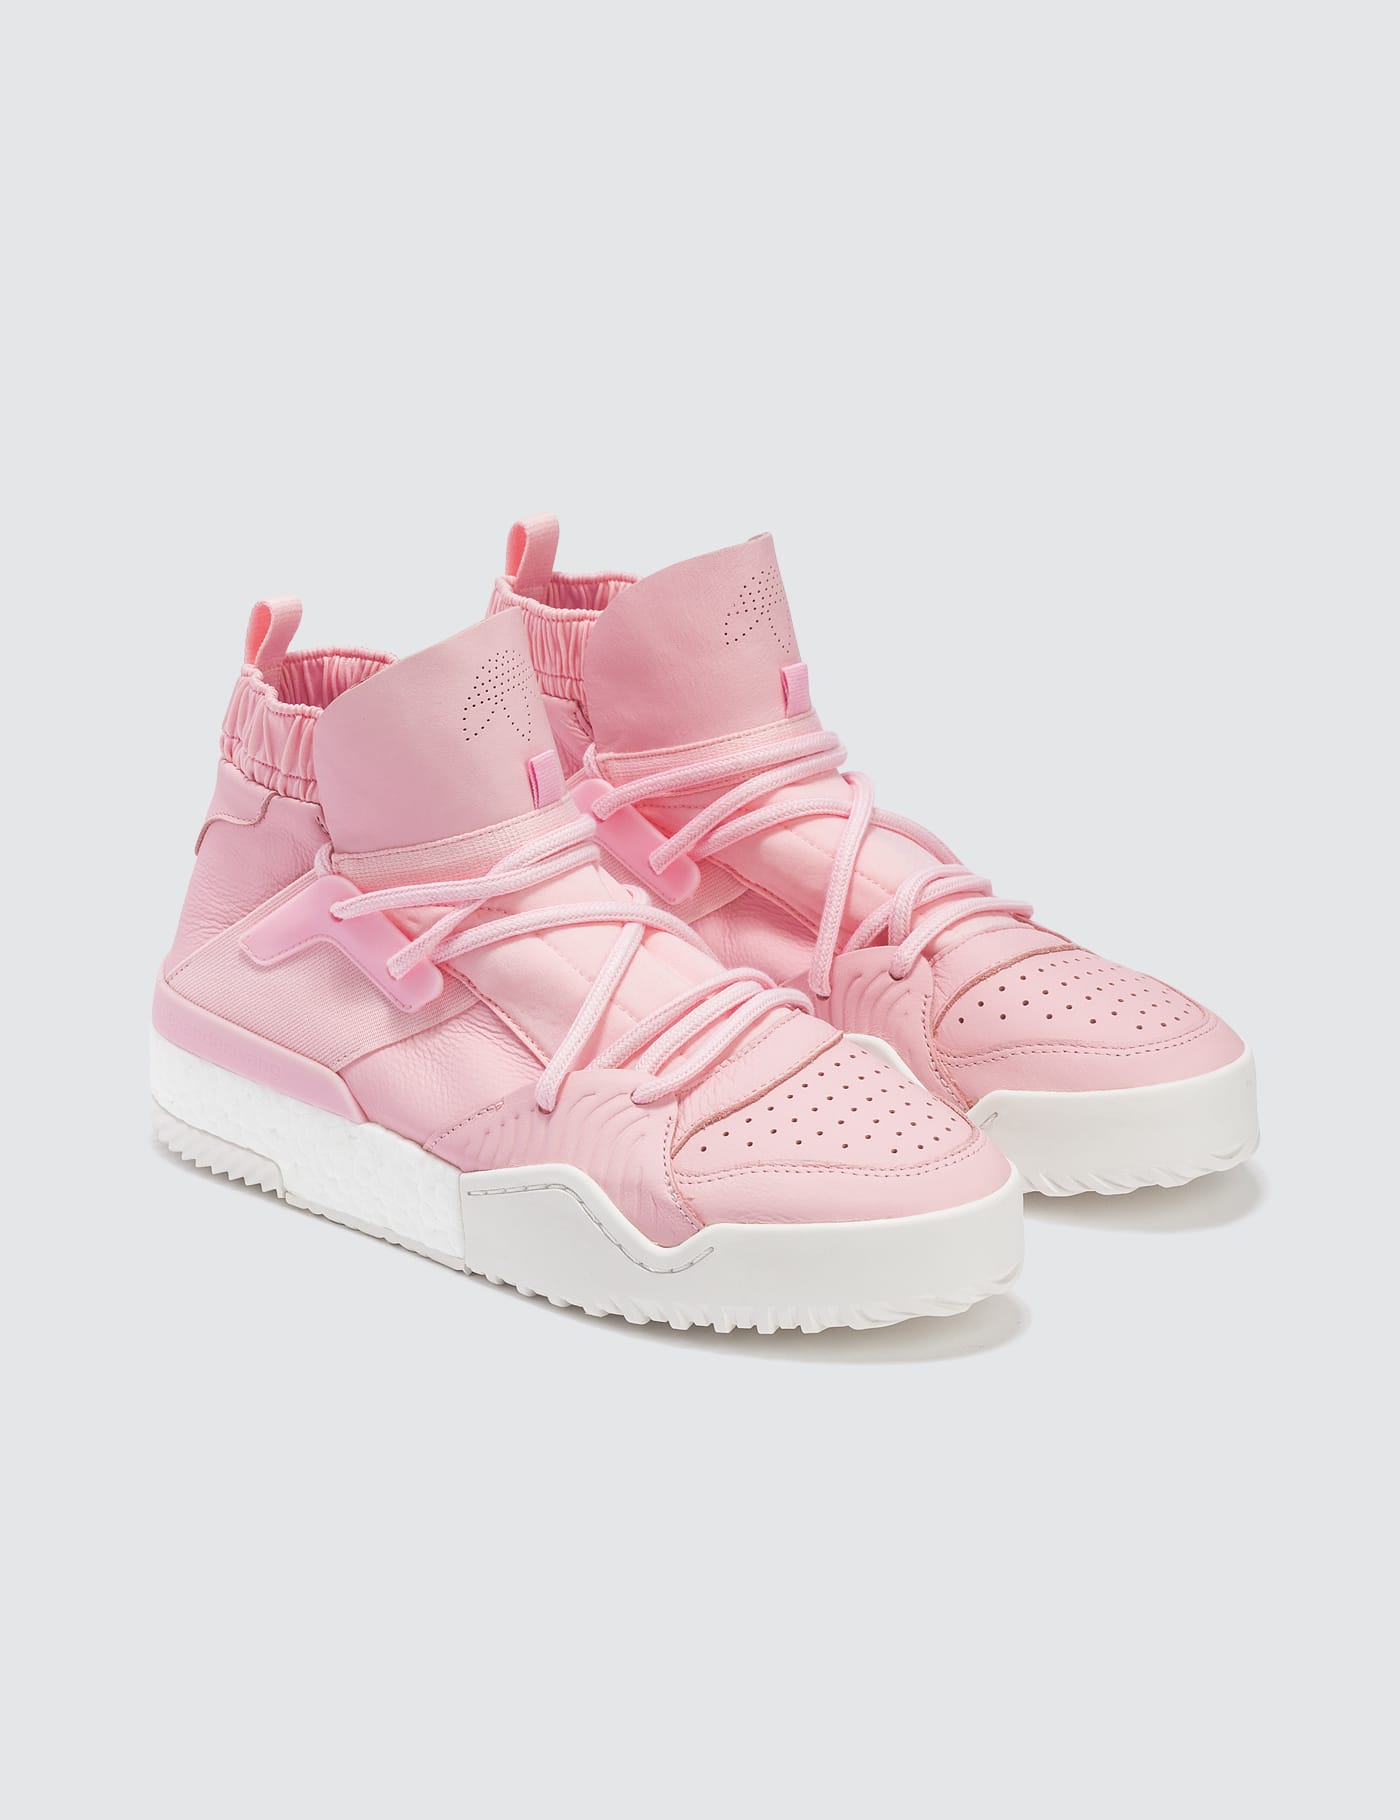 adidas alexander wang bball pink